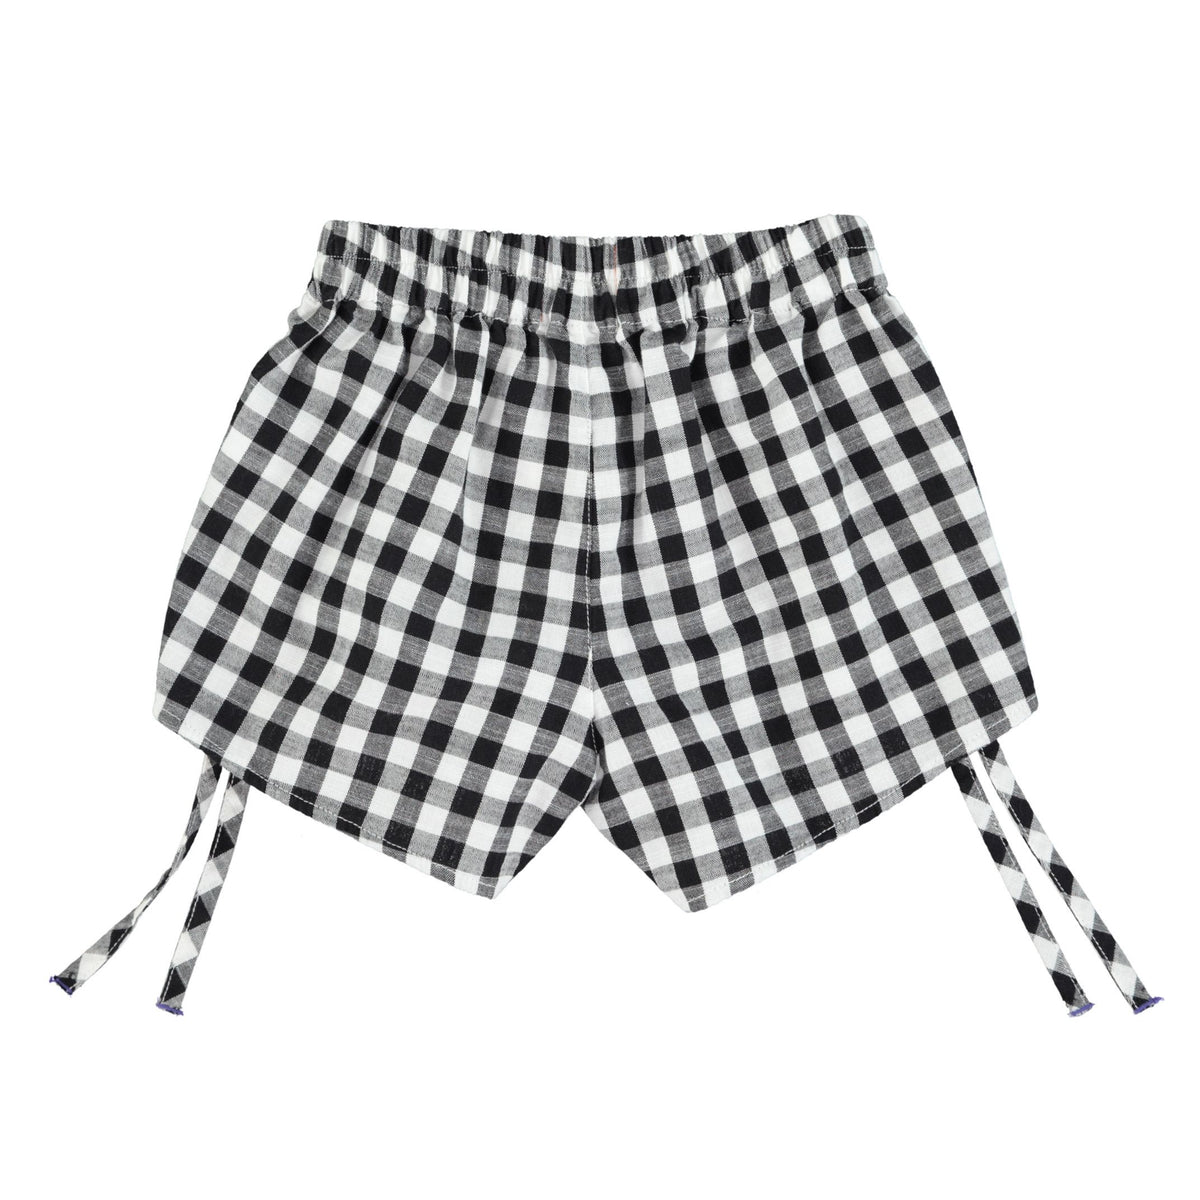 piupiuchick shorts - black and white checkered